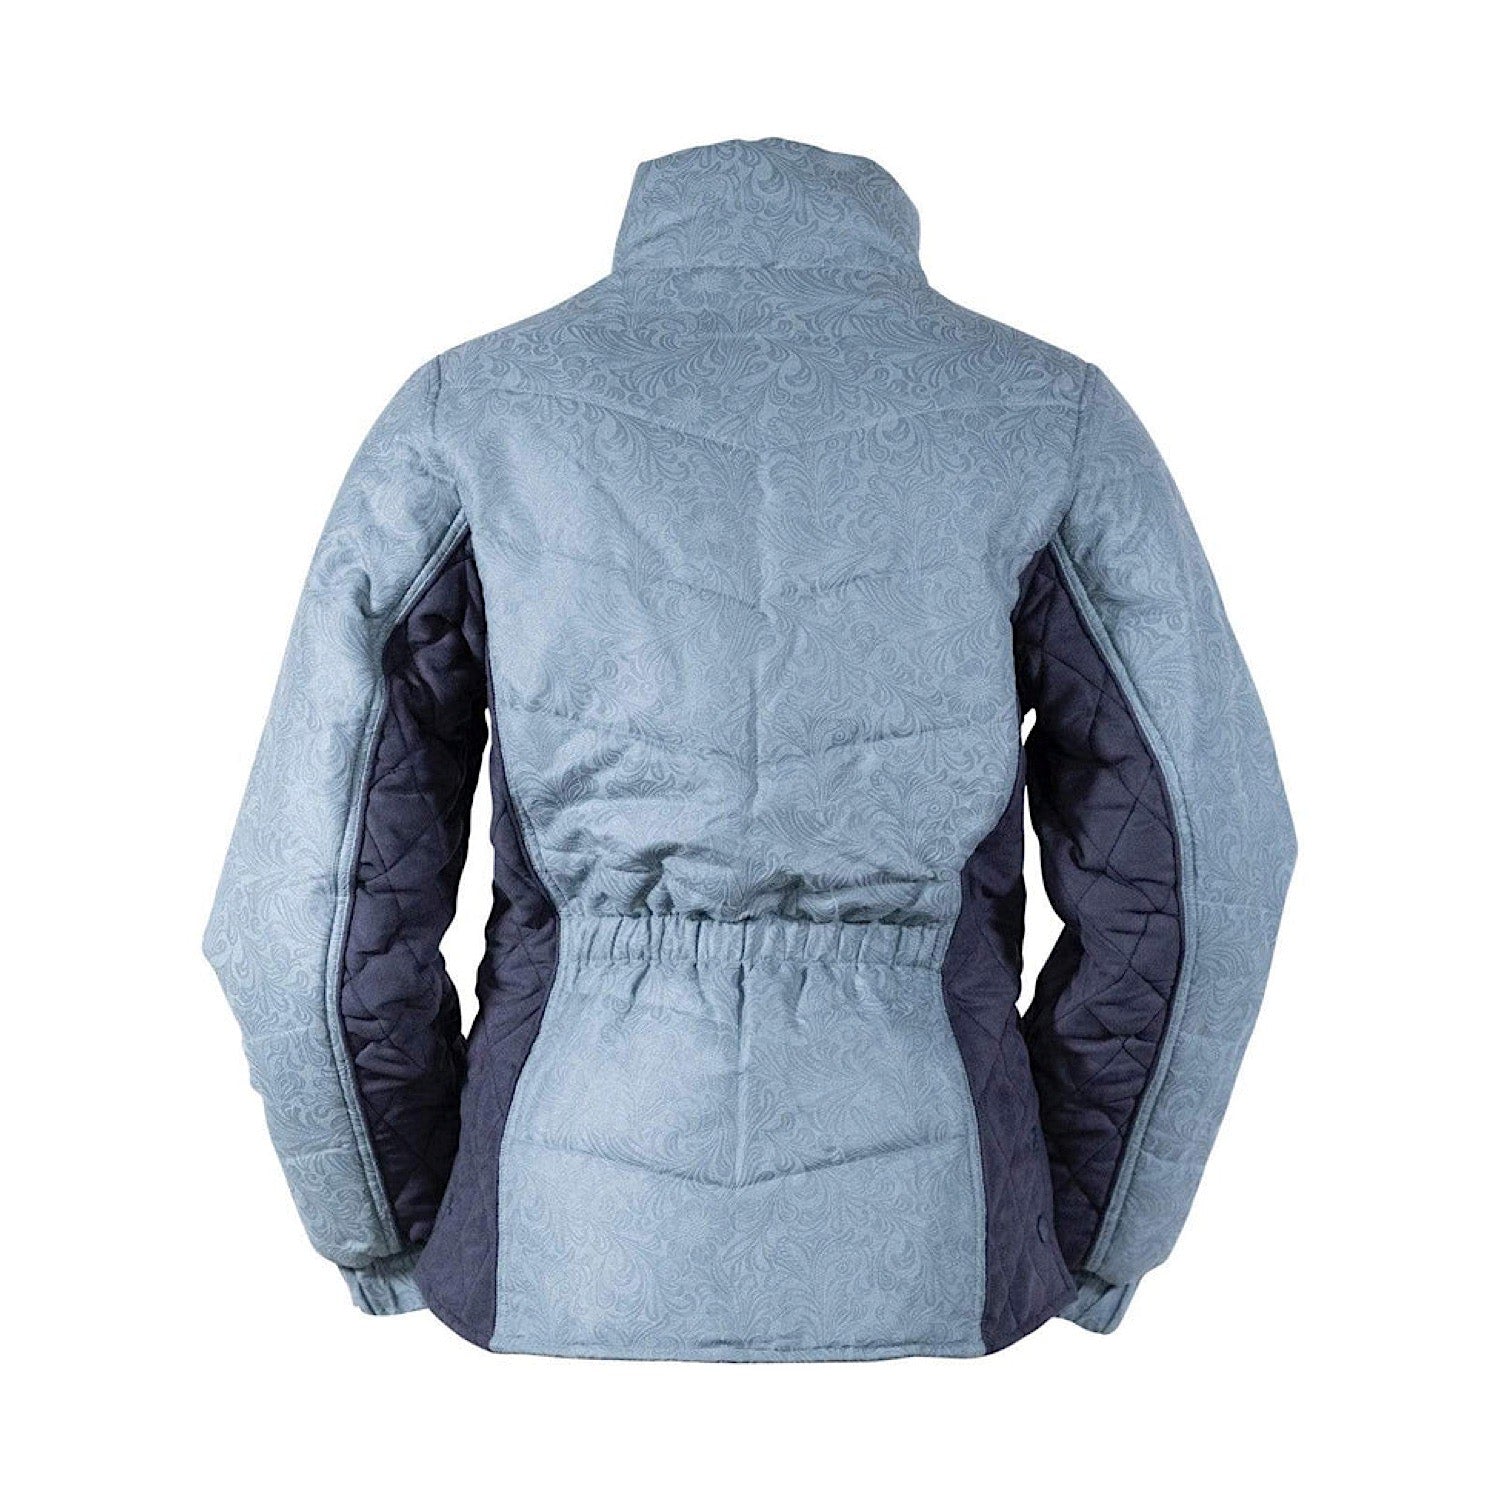 Men's Coats & Jackets for sale in Seaway | Facebook Marketplace | Facebook